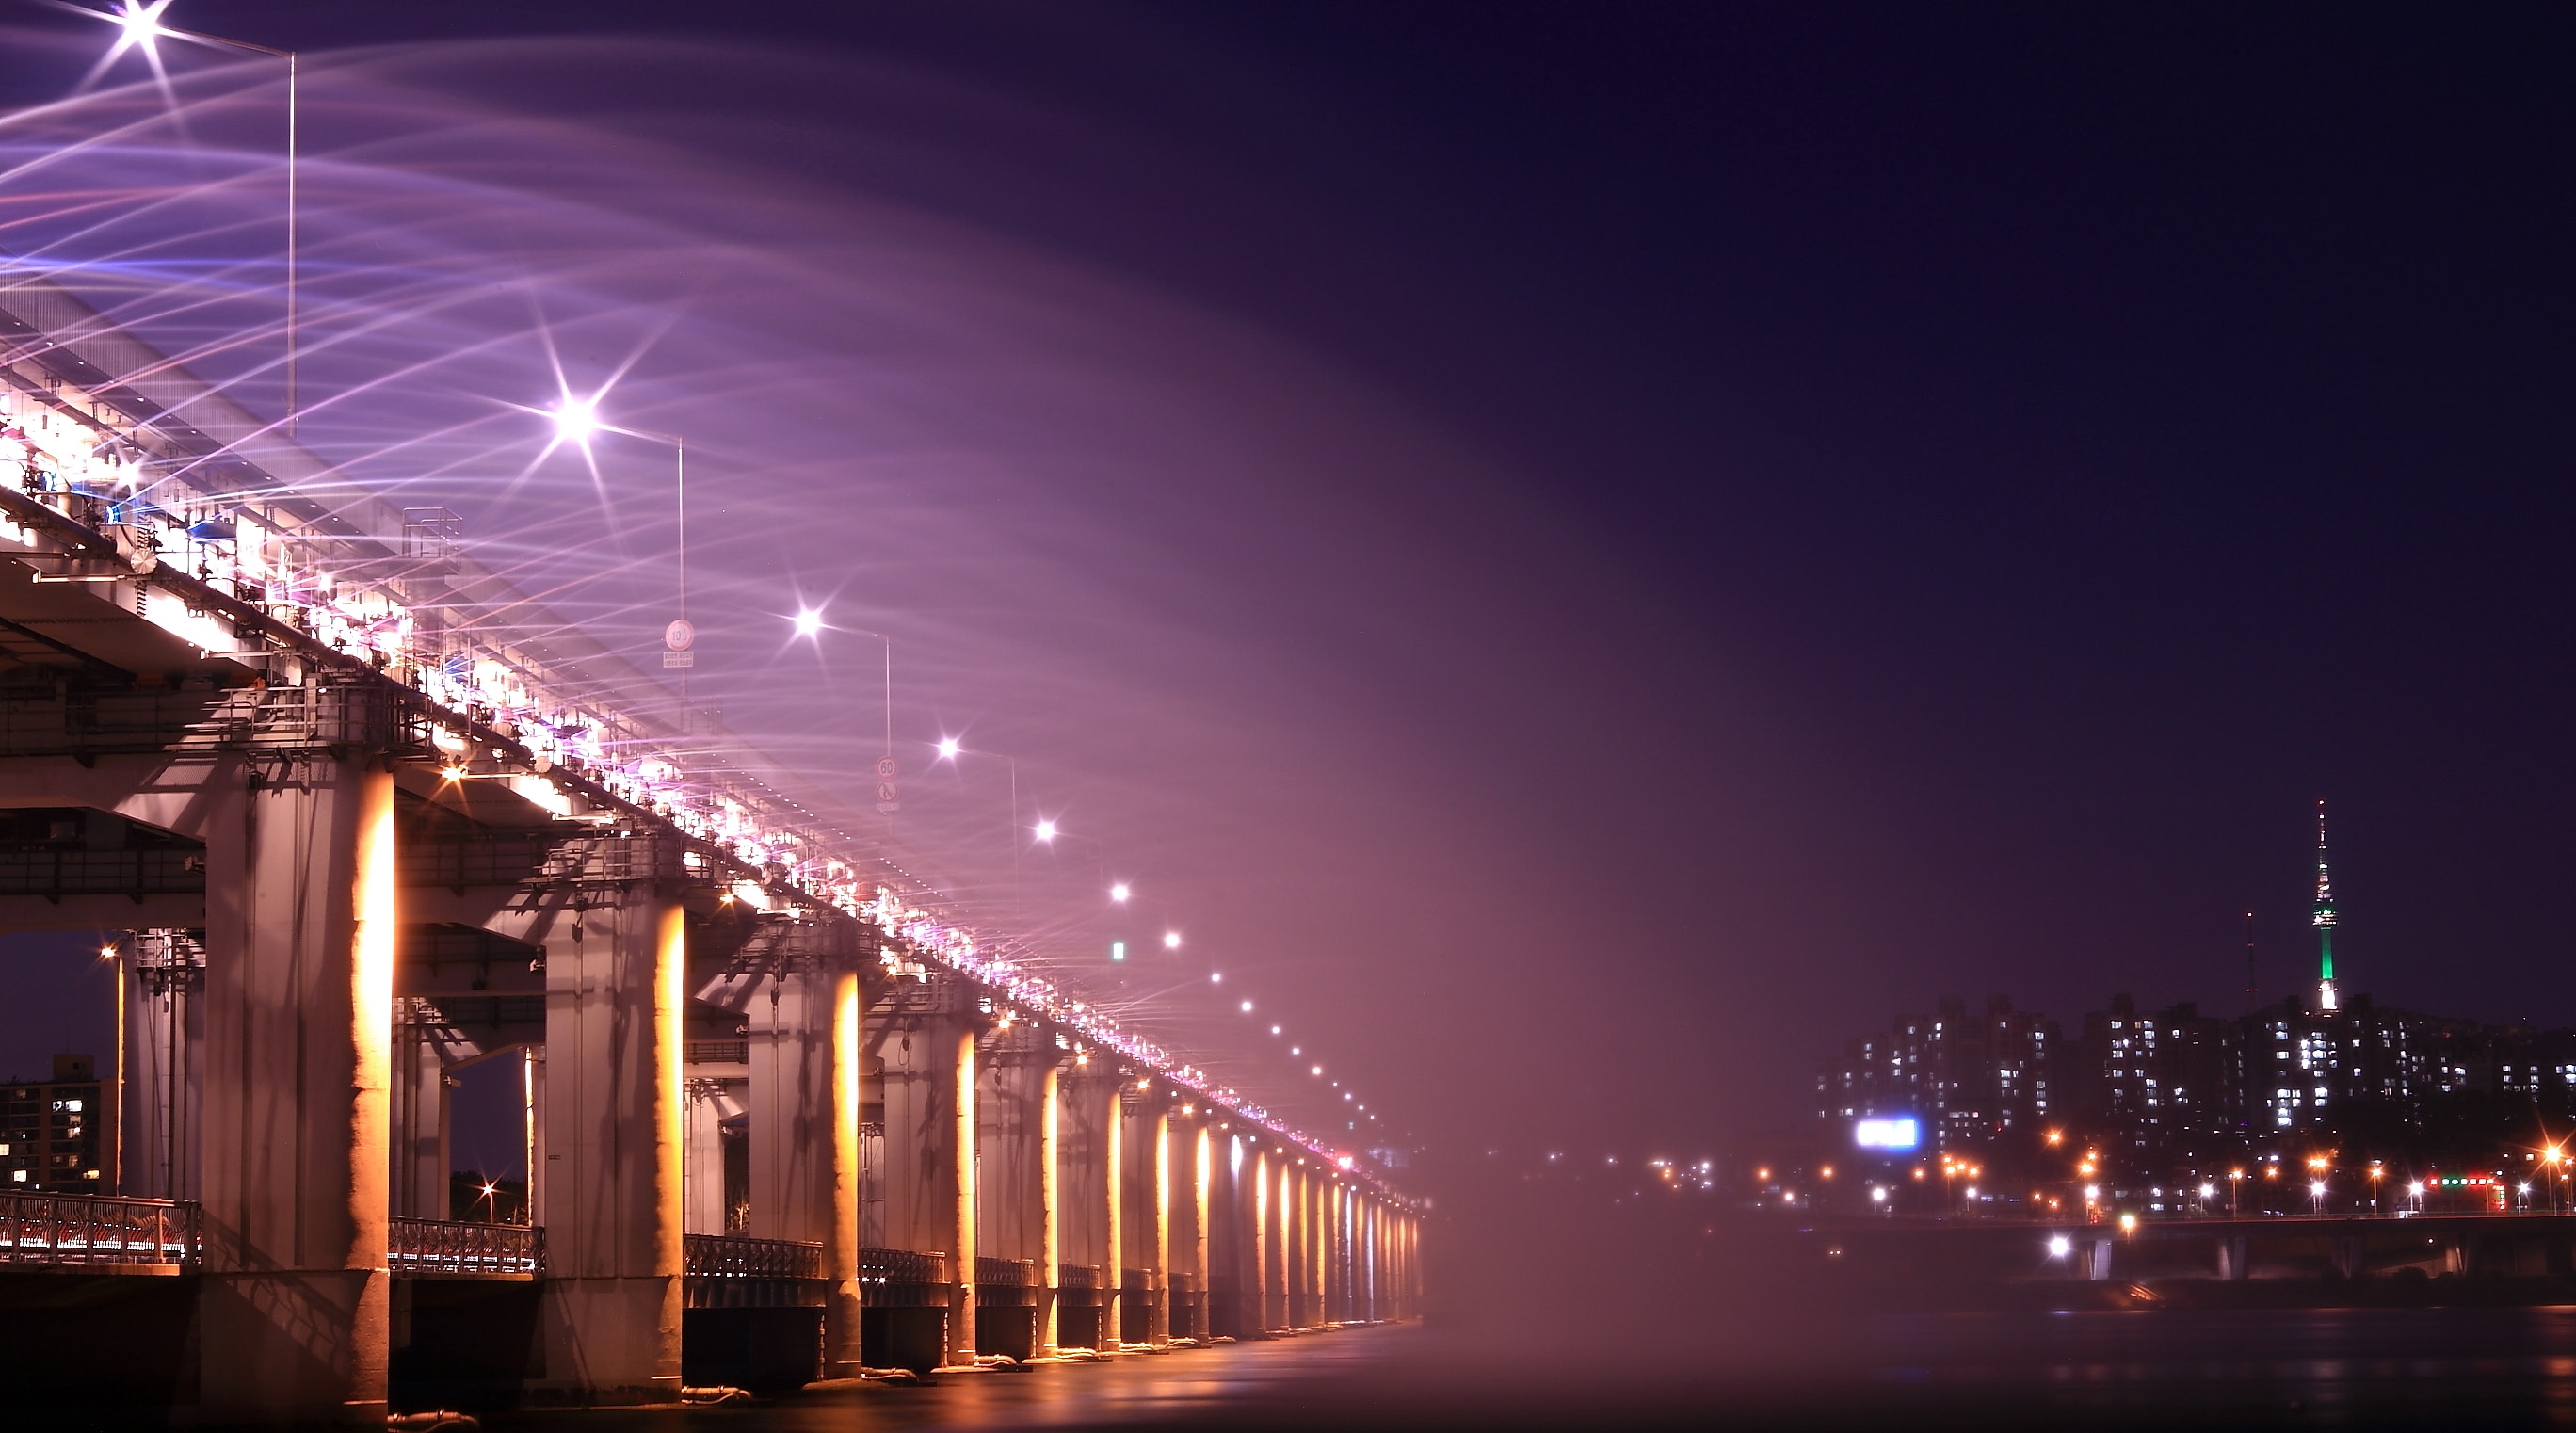 Gray bridge with street light during nighttime photo